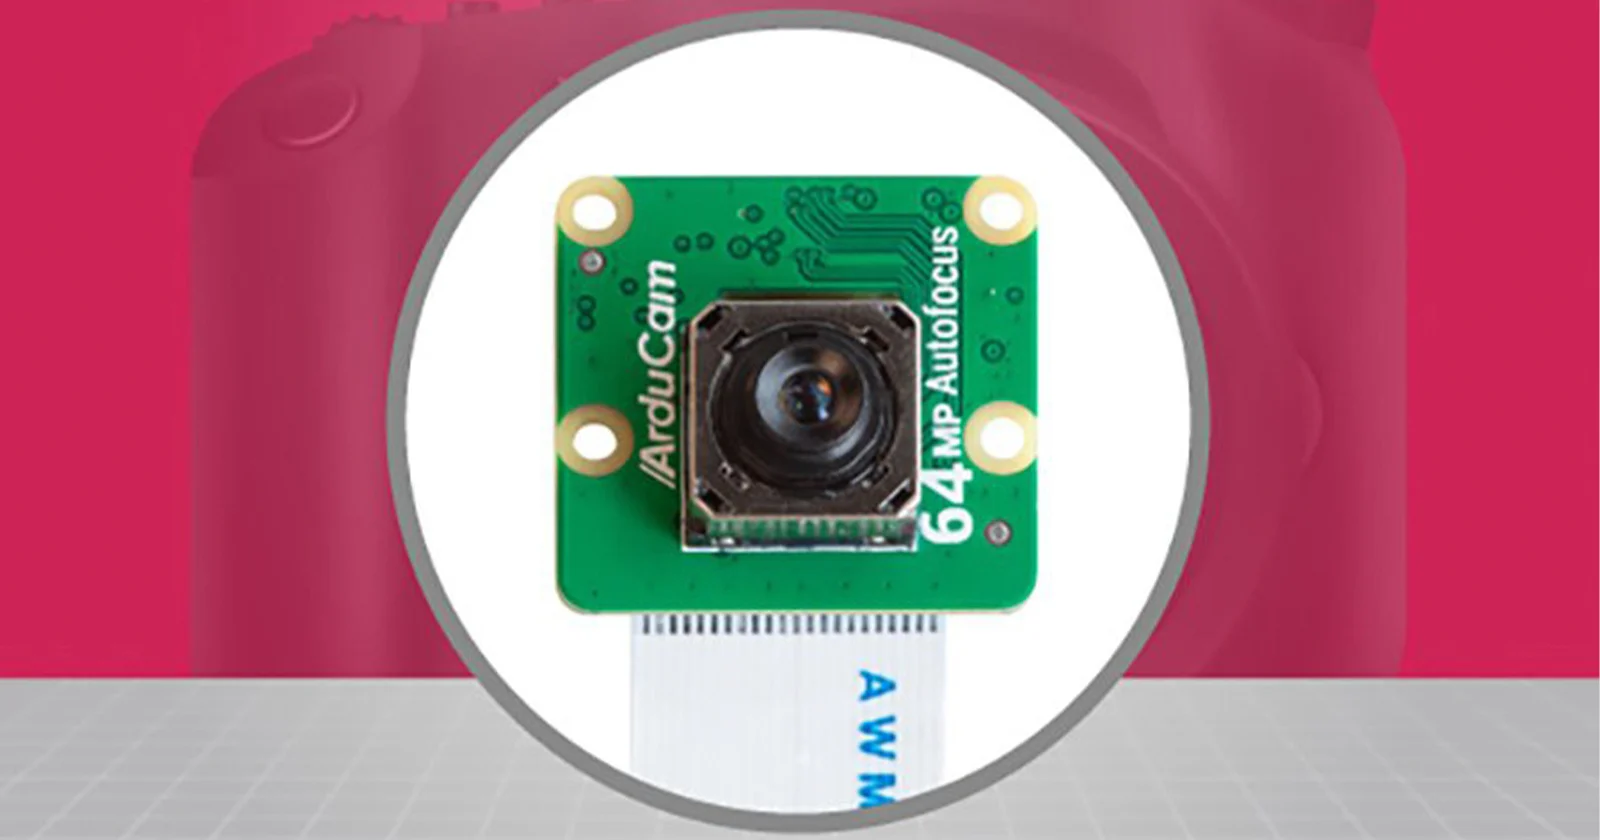 Adrucam announces the 64mp PiHawk camera for RaspberryPi